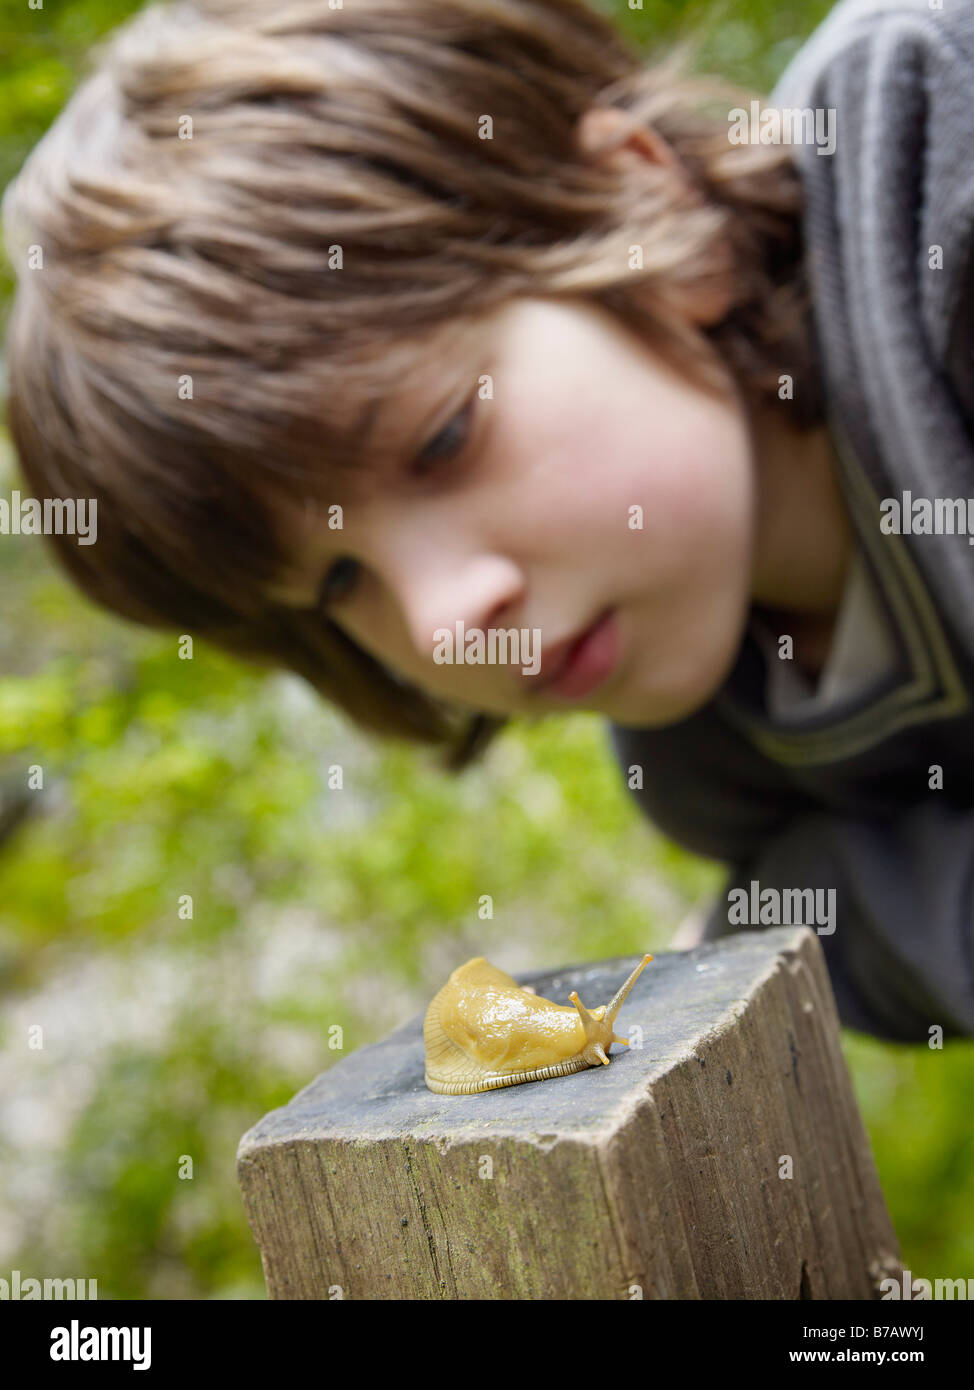 Boy Examining a Banana Slug Stock Photo